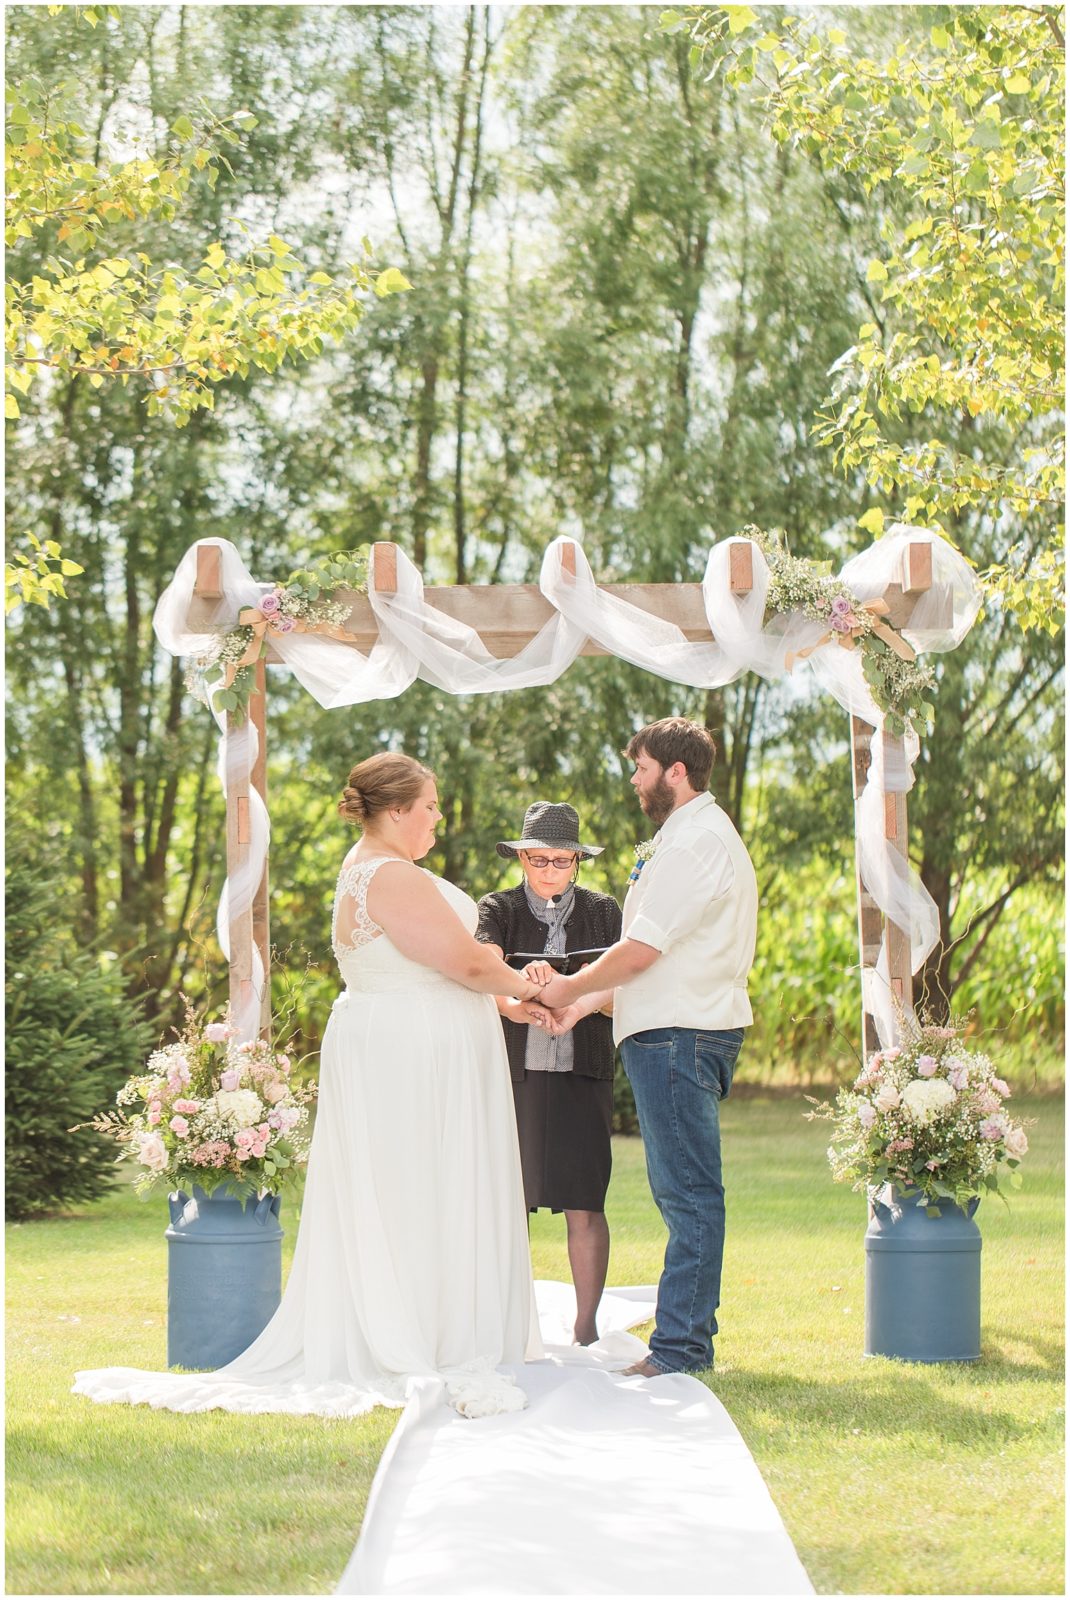 Family Farm Wedding Ceremony | Wedding in Spencer, Iowa shot by Jessica Brees Photography